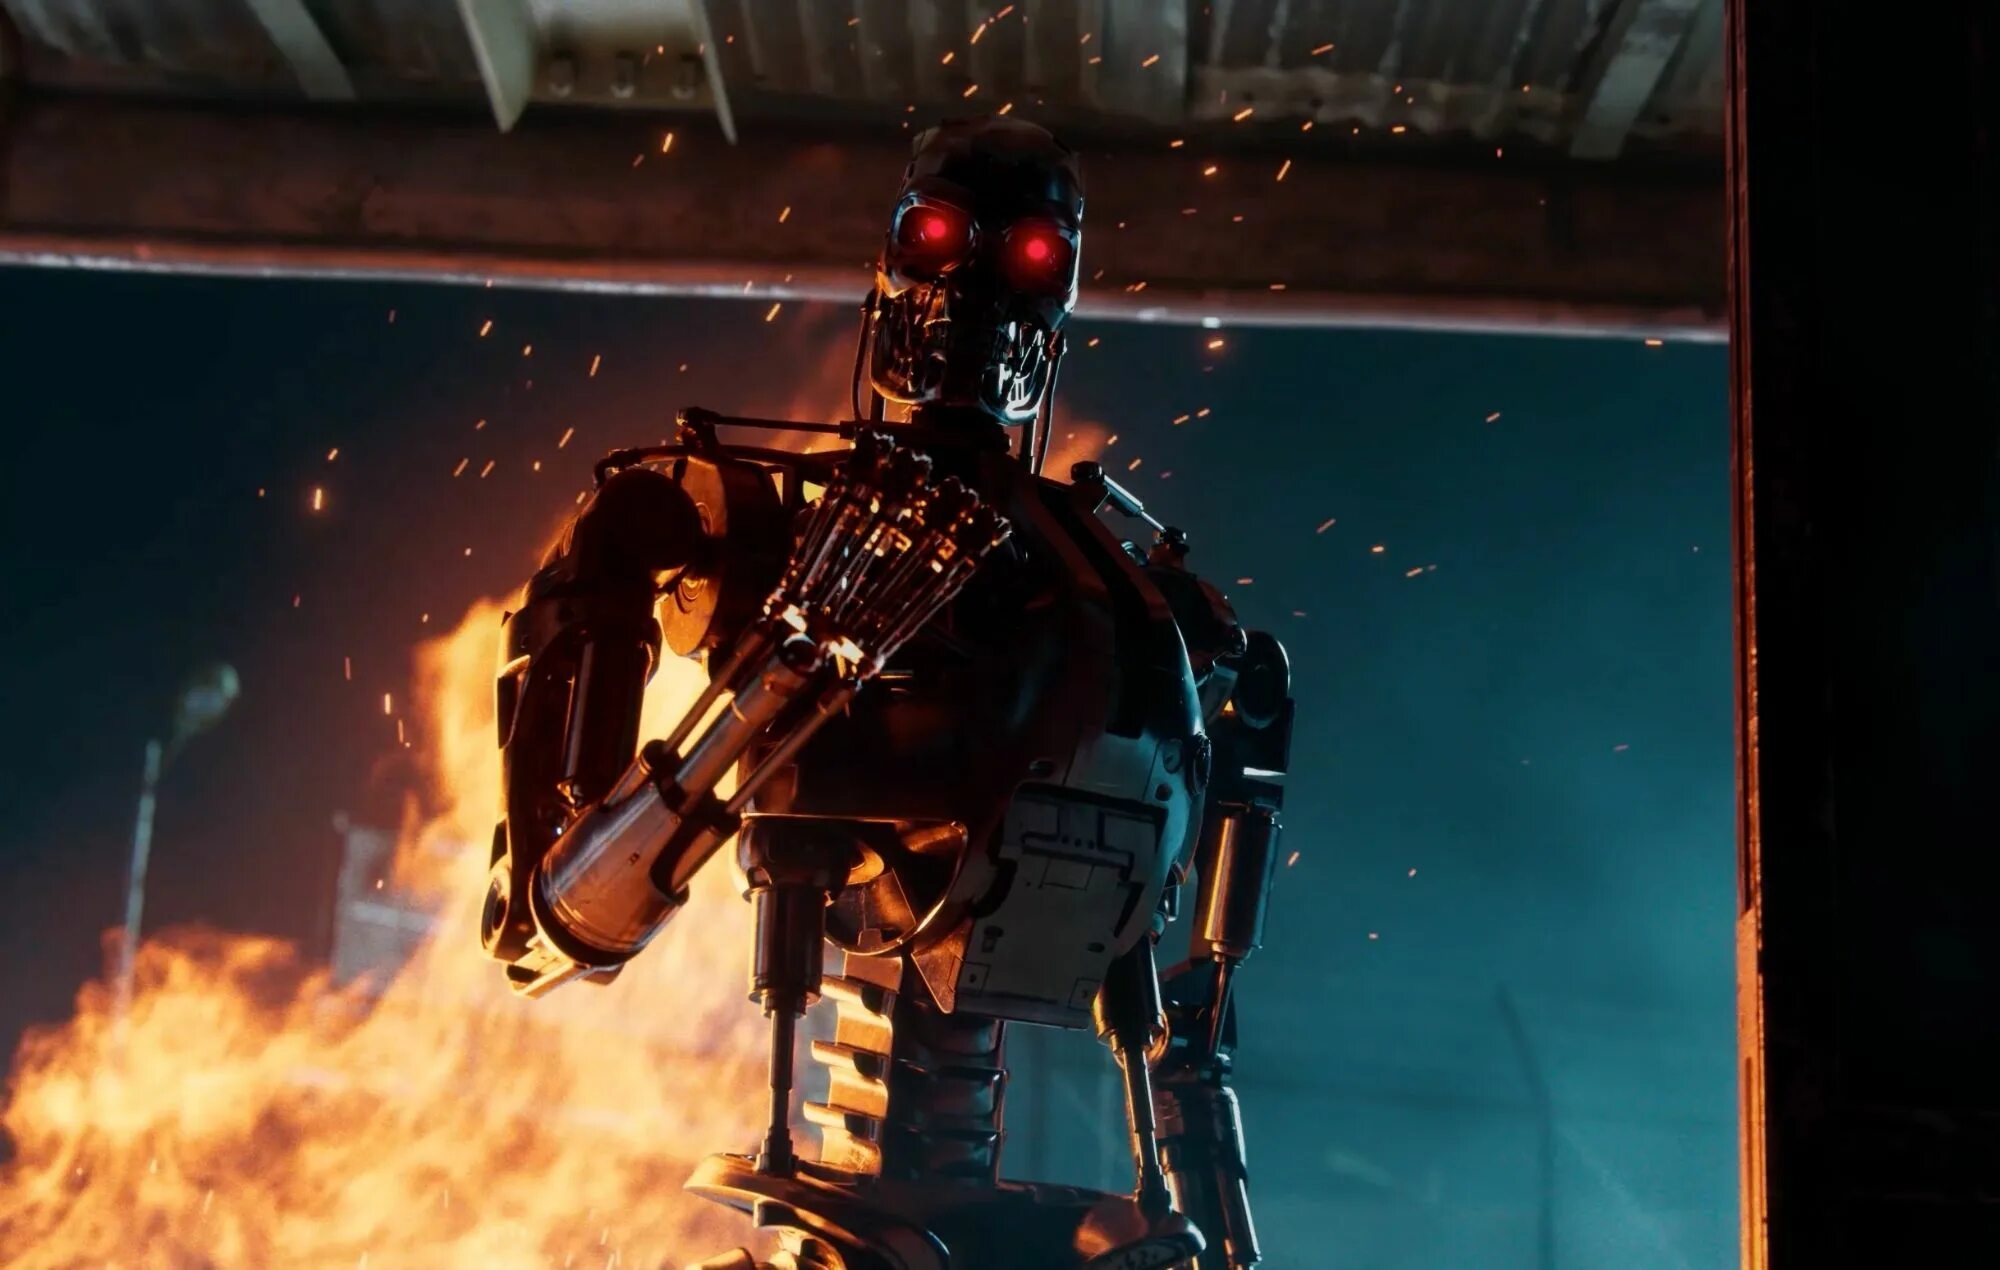 Terminator video game. Терминатор сурвайвал Проджект. Т-800 Терминатор в играх. Терминатор игра 2022. Terminator Survival Project игра.